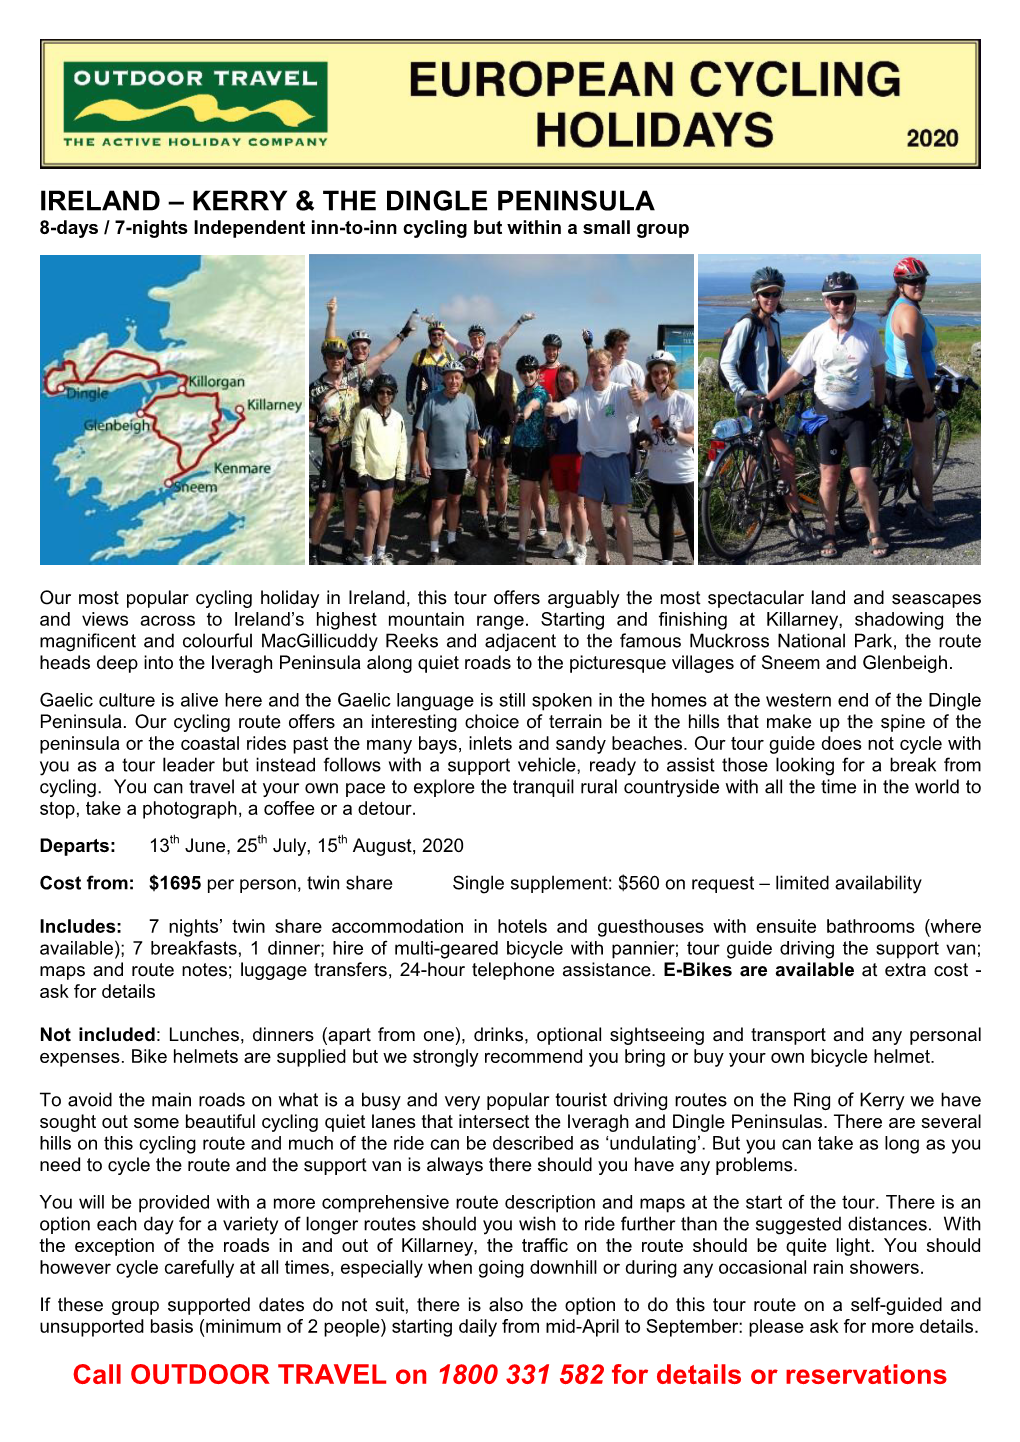 Ireland Kerry & Dingle Peninsula Cycling